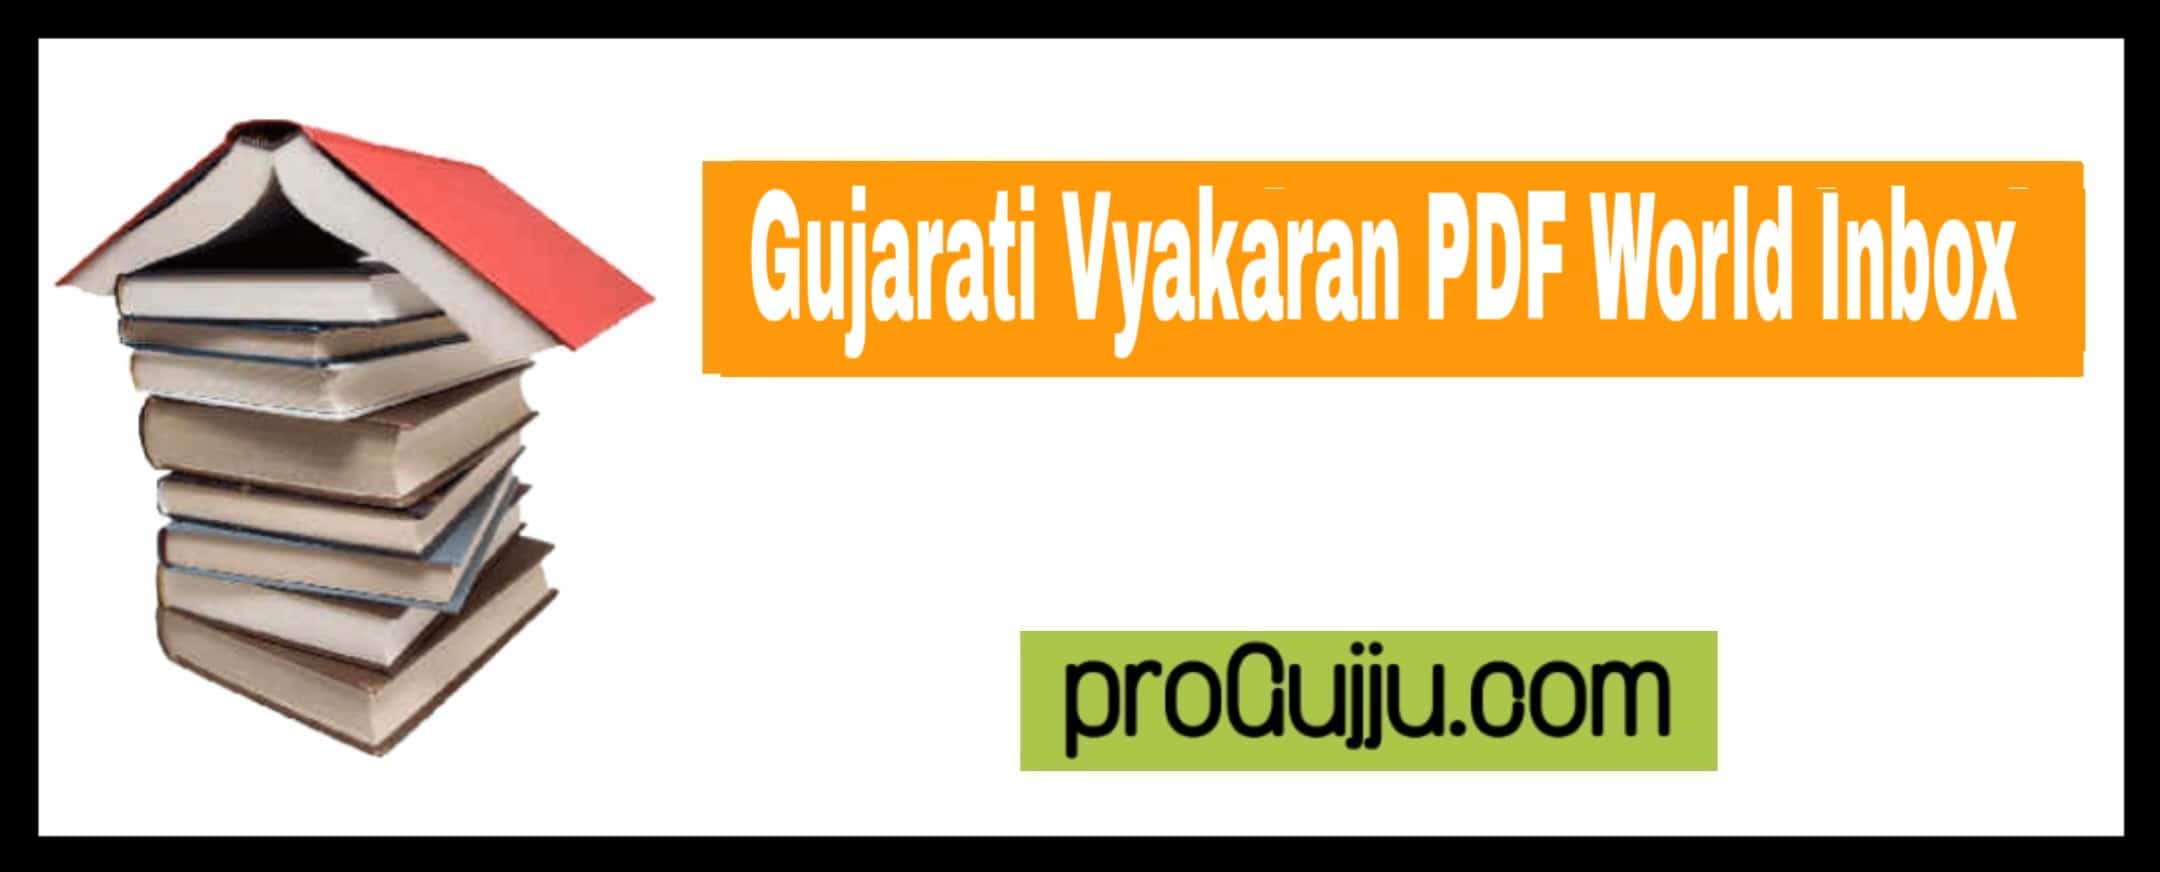 Gujarati vyakaran Pdf World Inbox